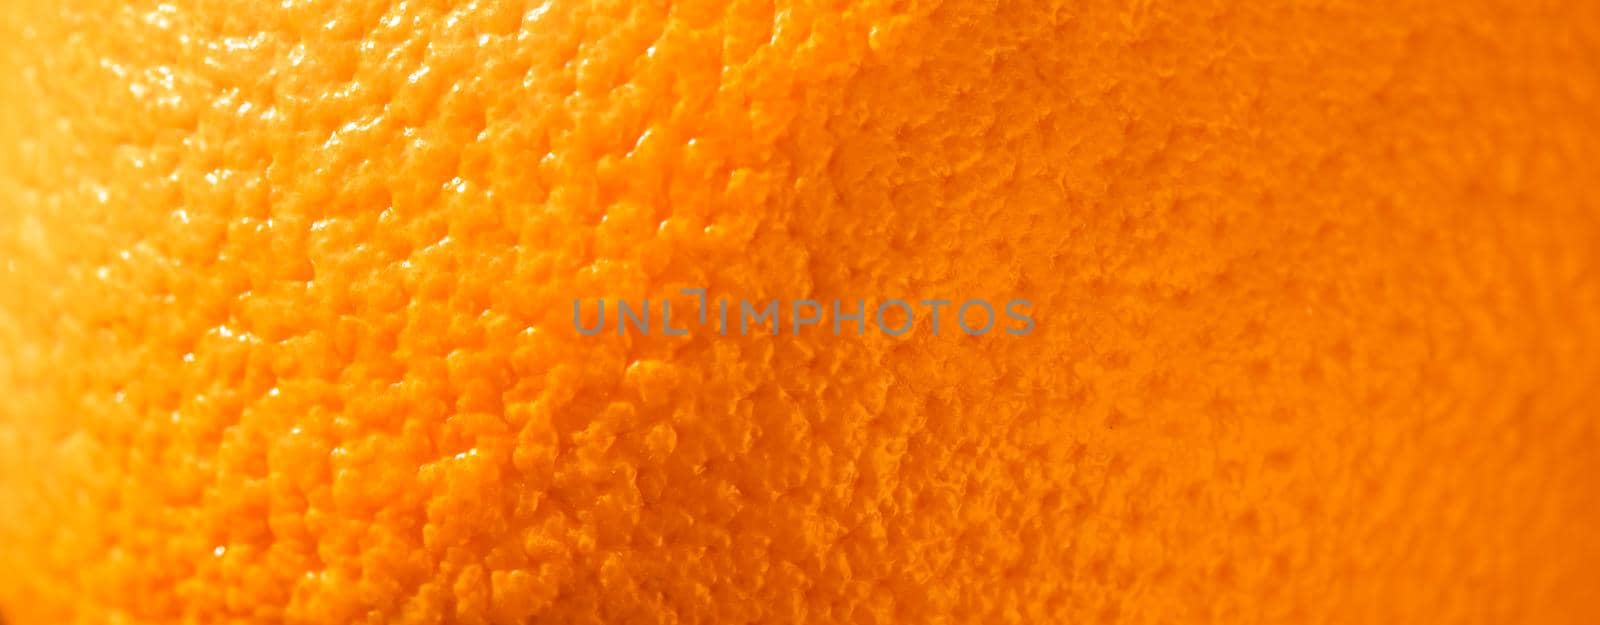 Ripe orange peel background. Close up view.